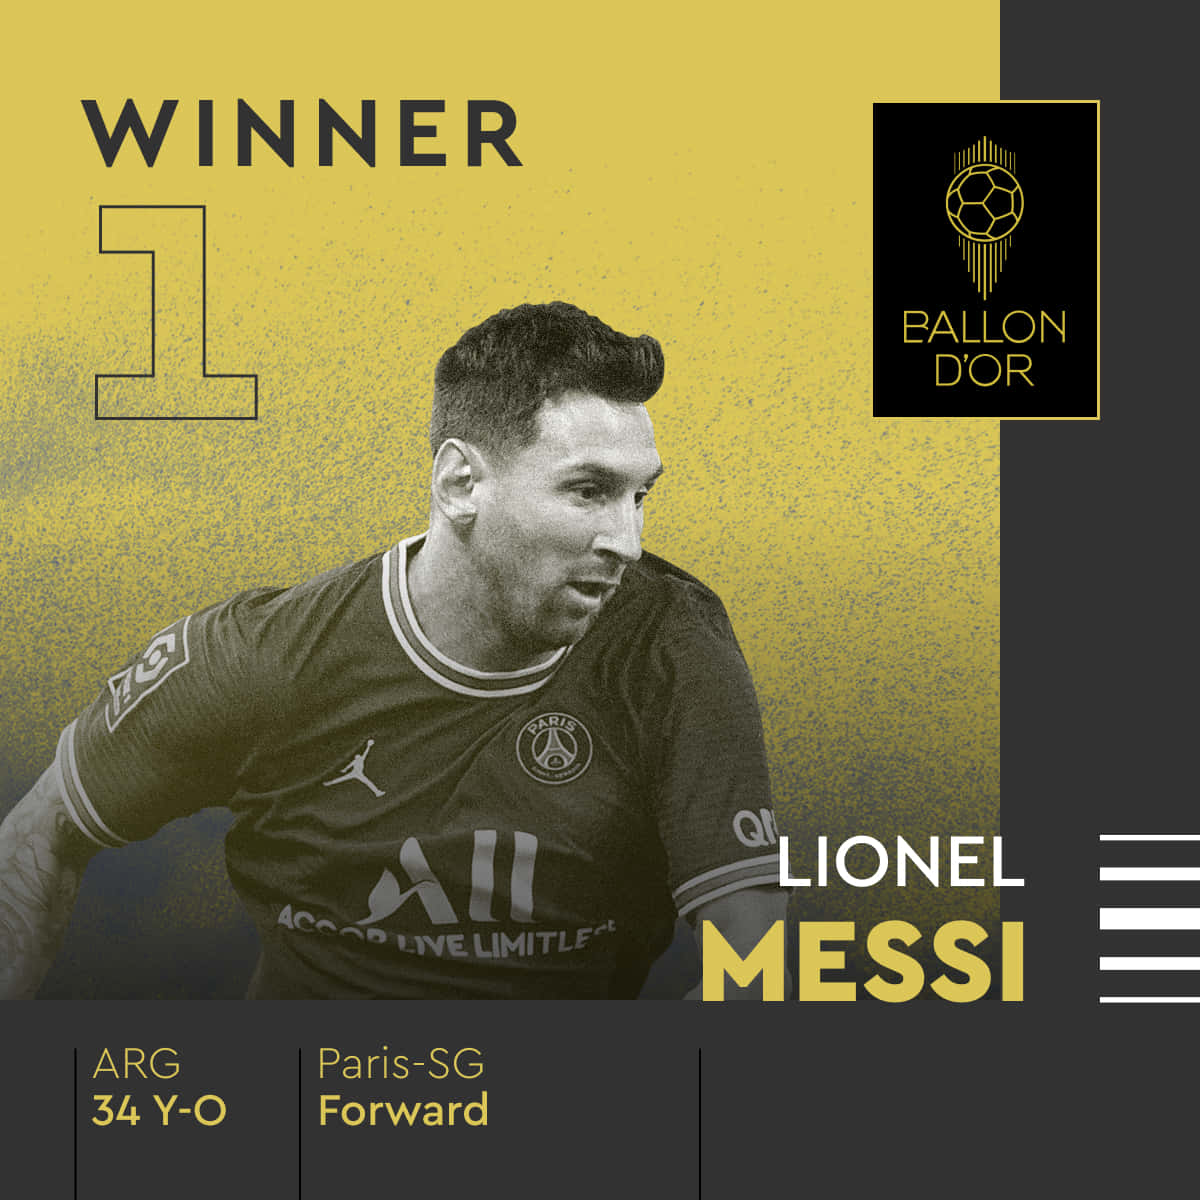 Messi Ballon Dor Winner Graphic Wallpaper